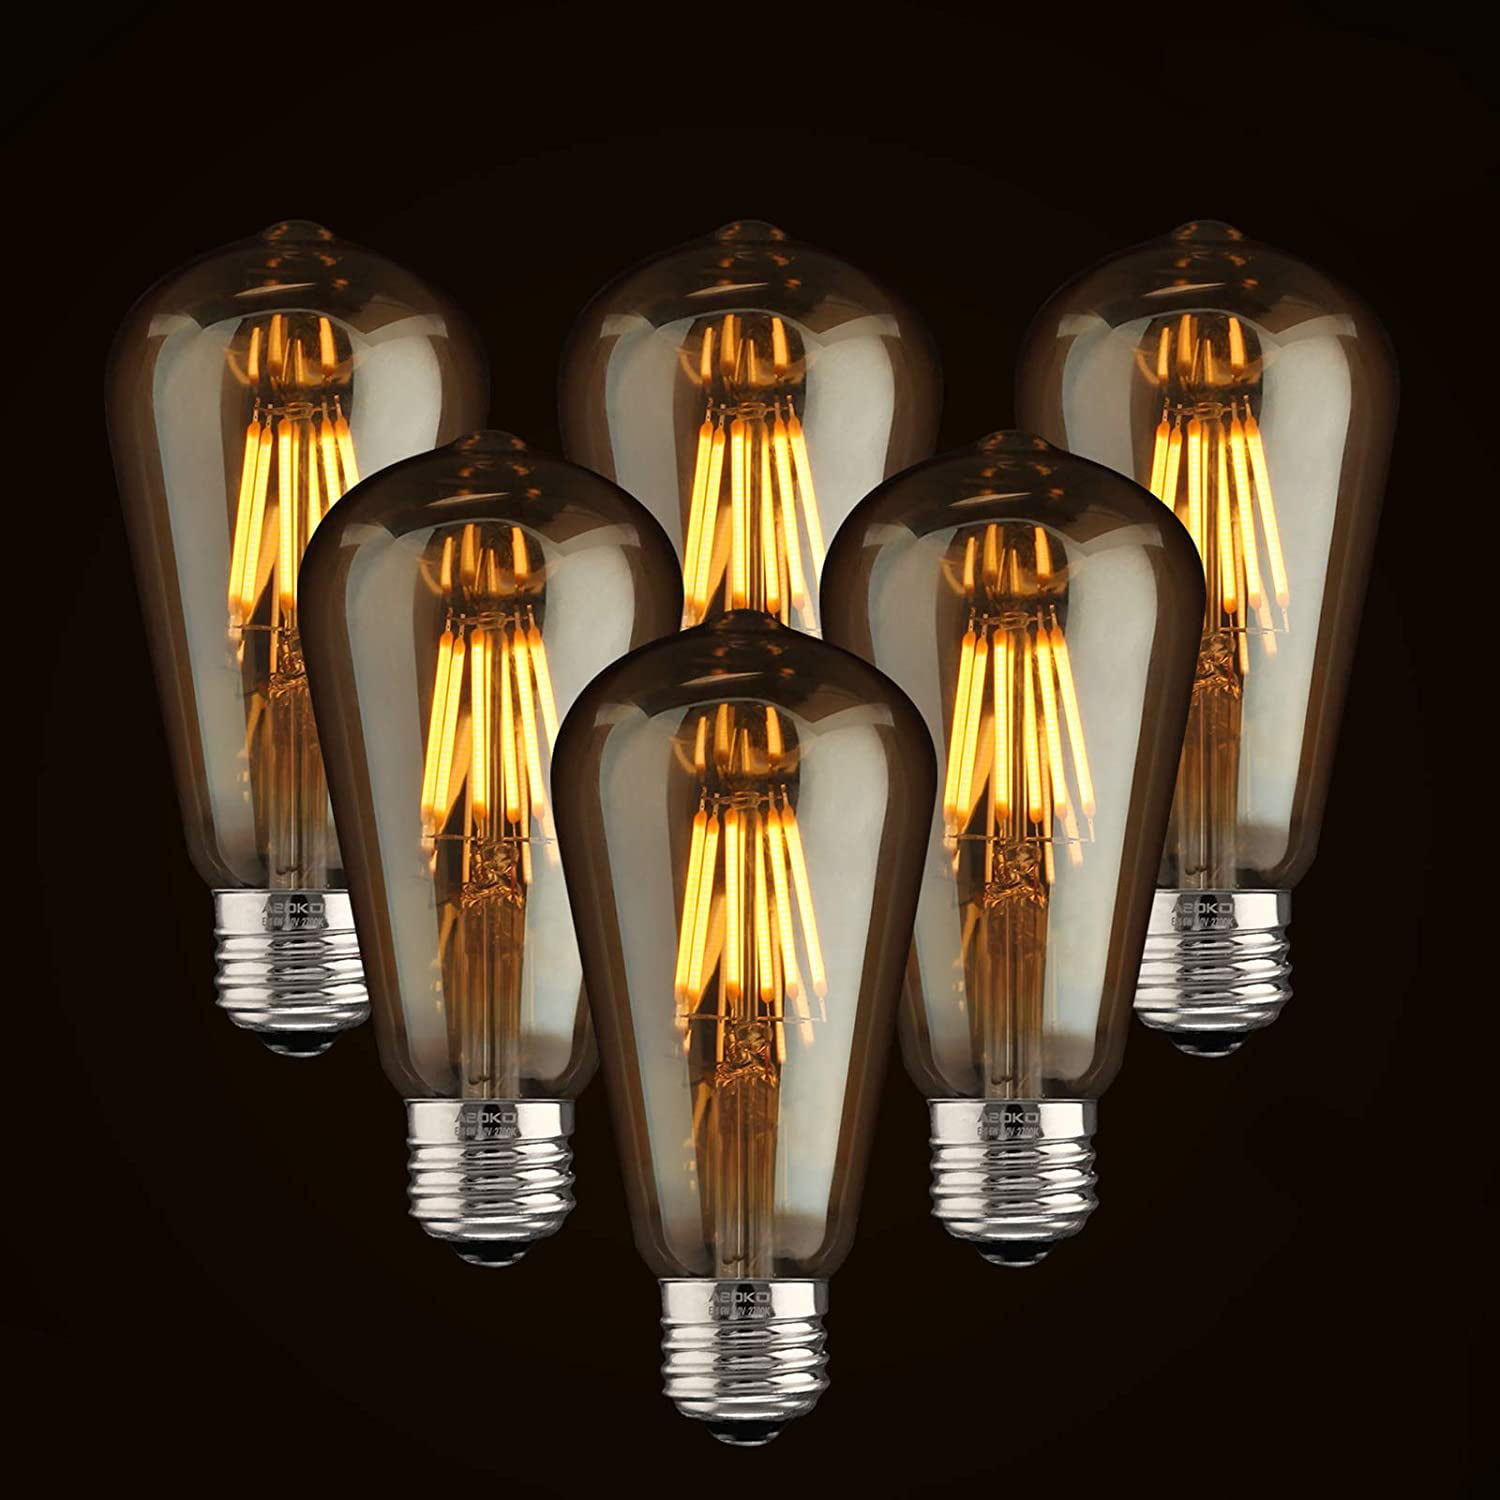 LED Dimmable Edison Light Bulbs 4w Vintage Bulb 2300k Warm White amber 6 for sale online 